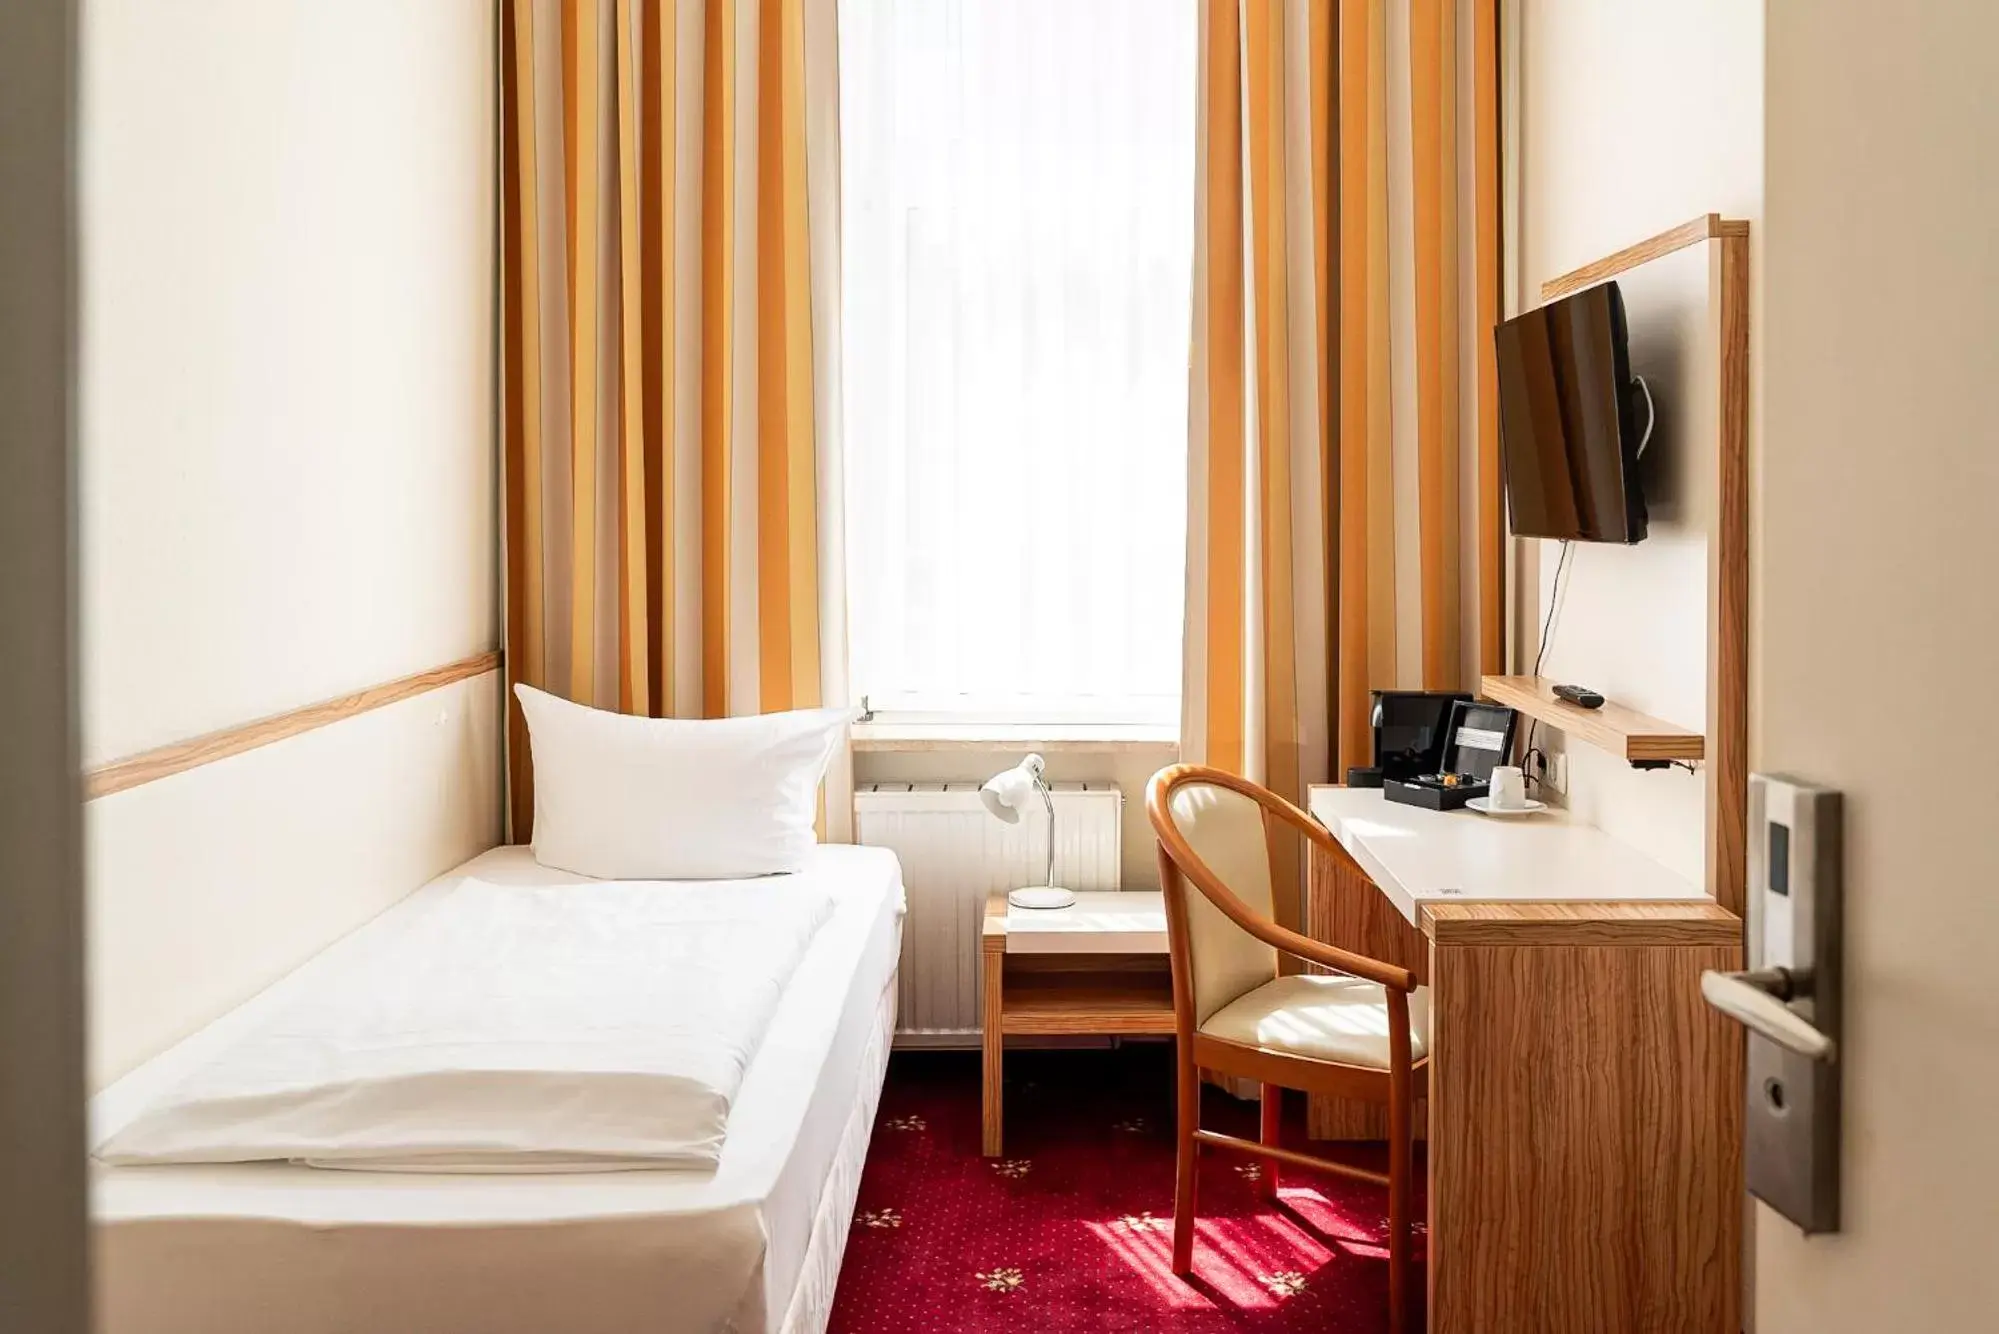 Bed in Hotel Banter Hof